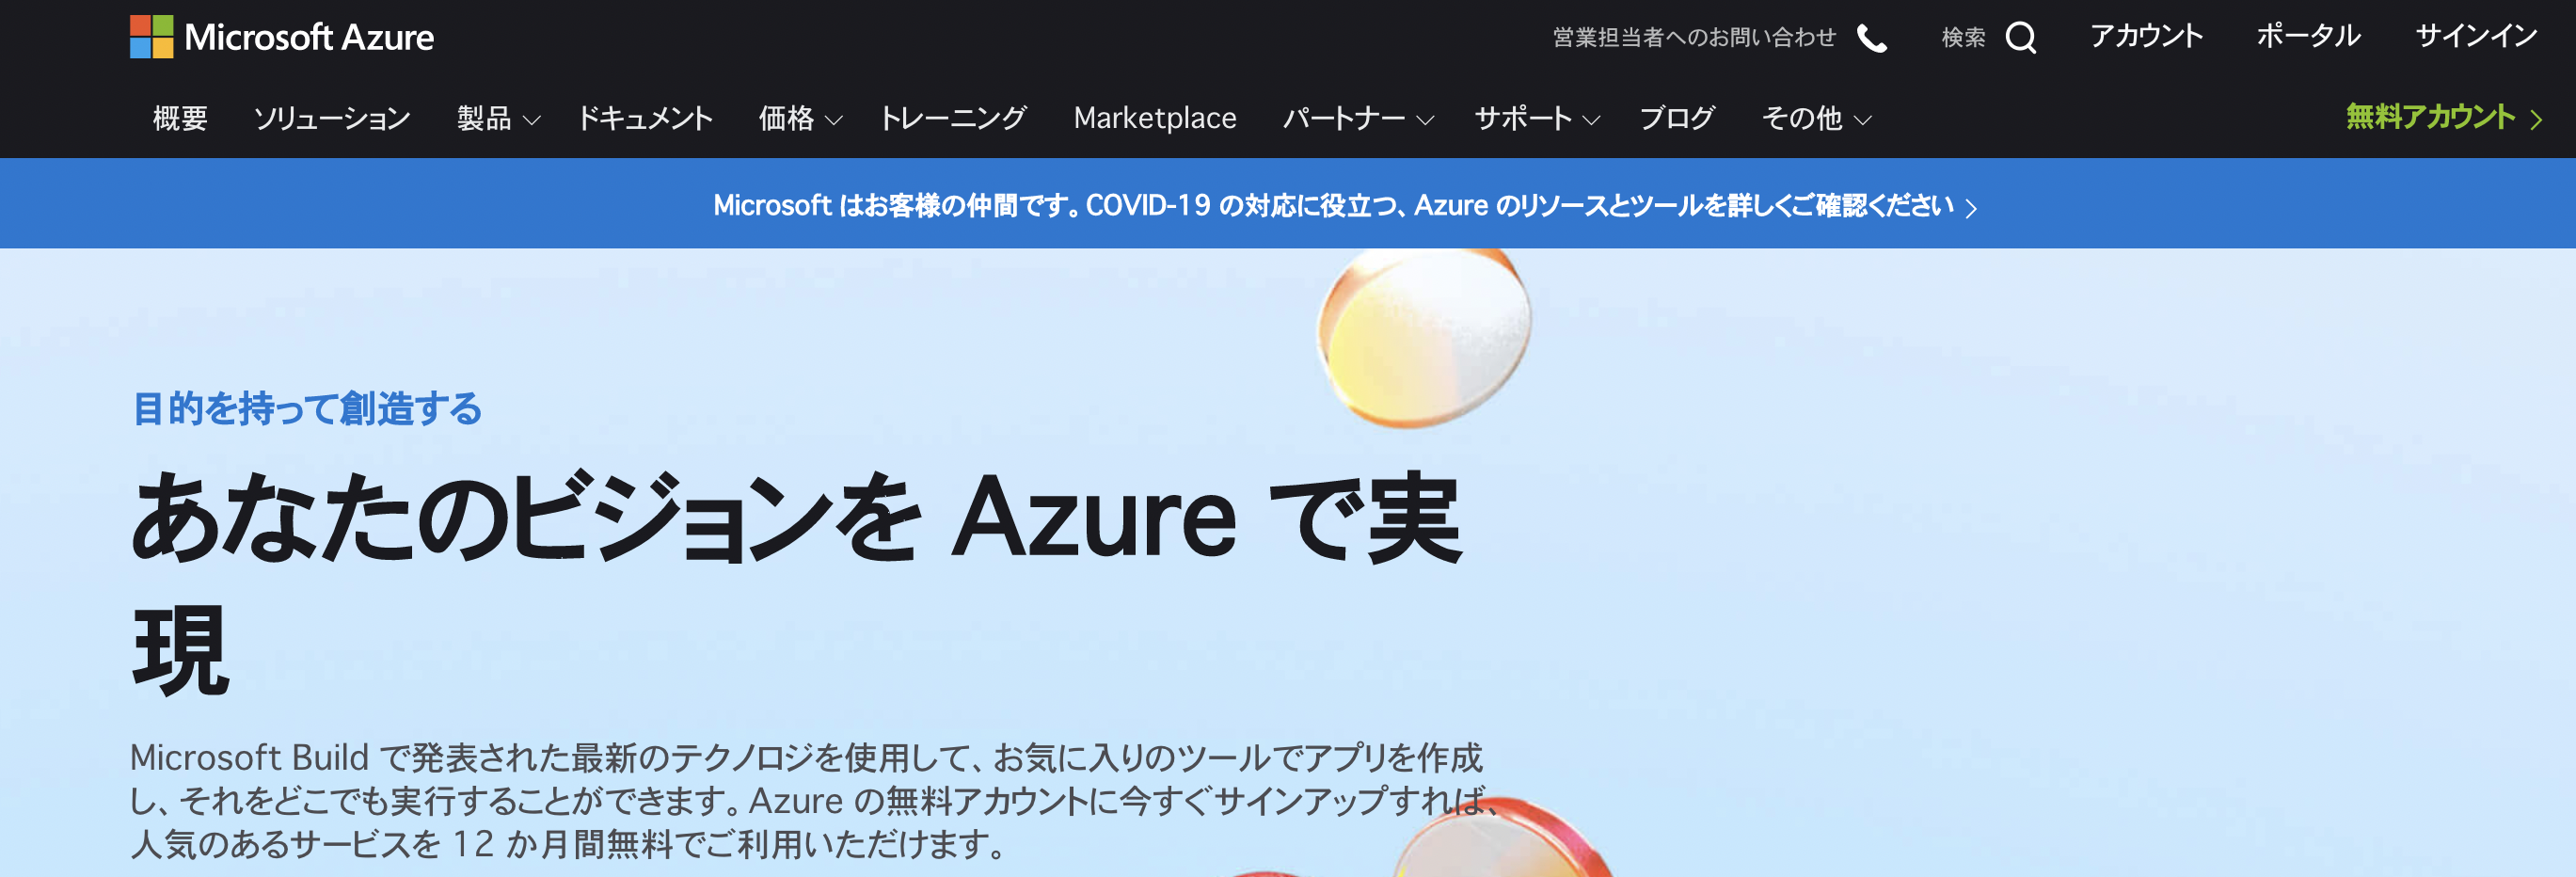 Microsoft Azureのイメージ画像